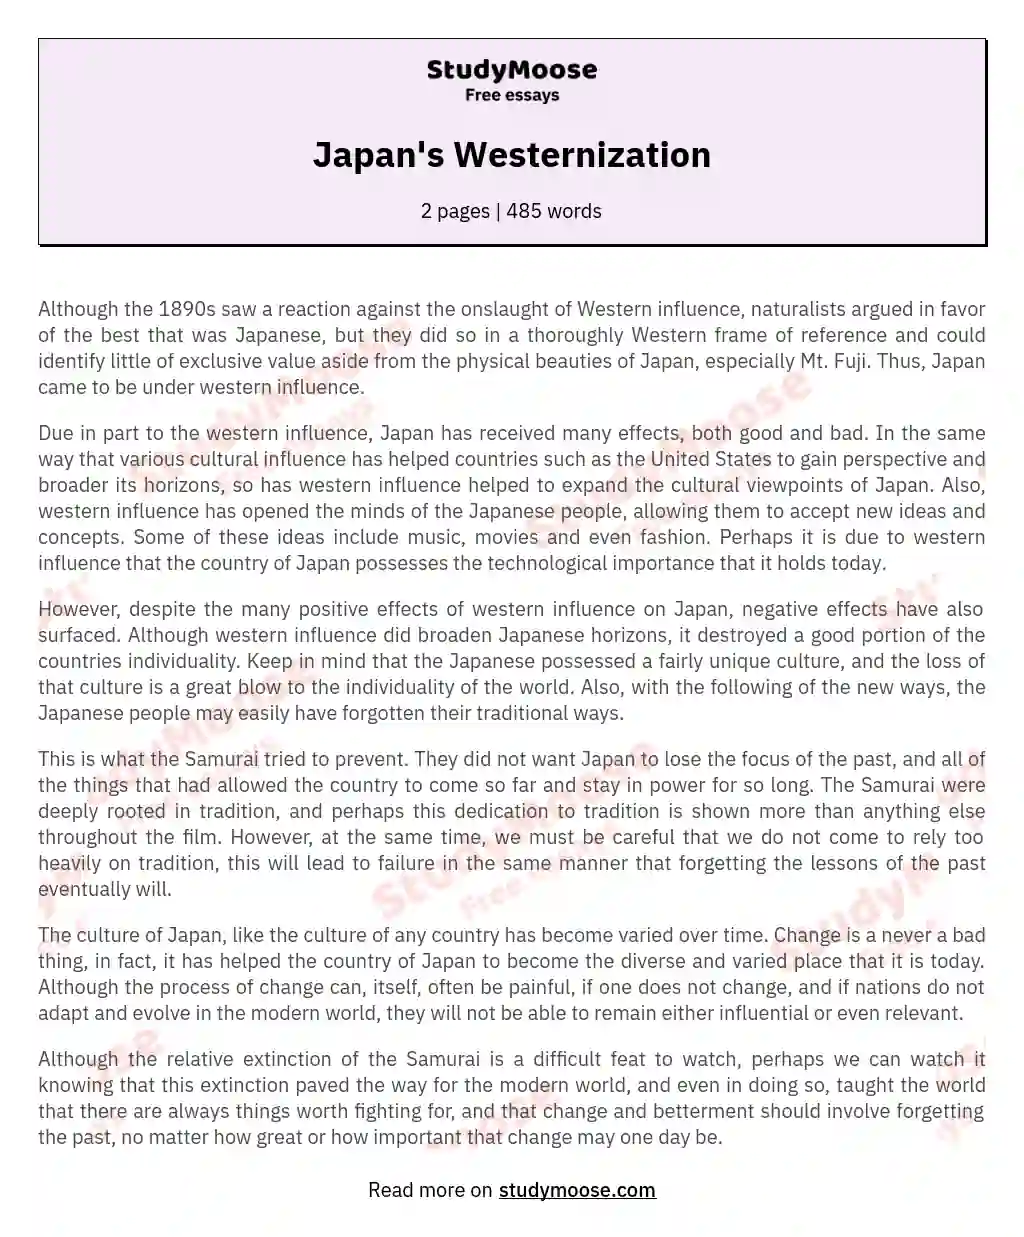 Japan's Westernization essay